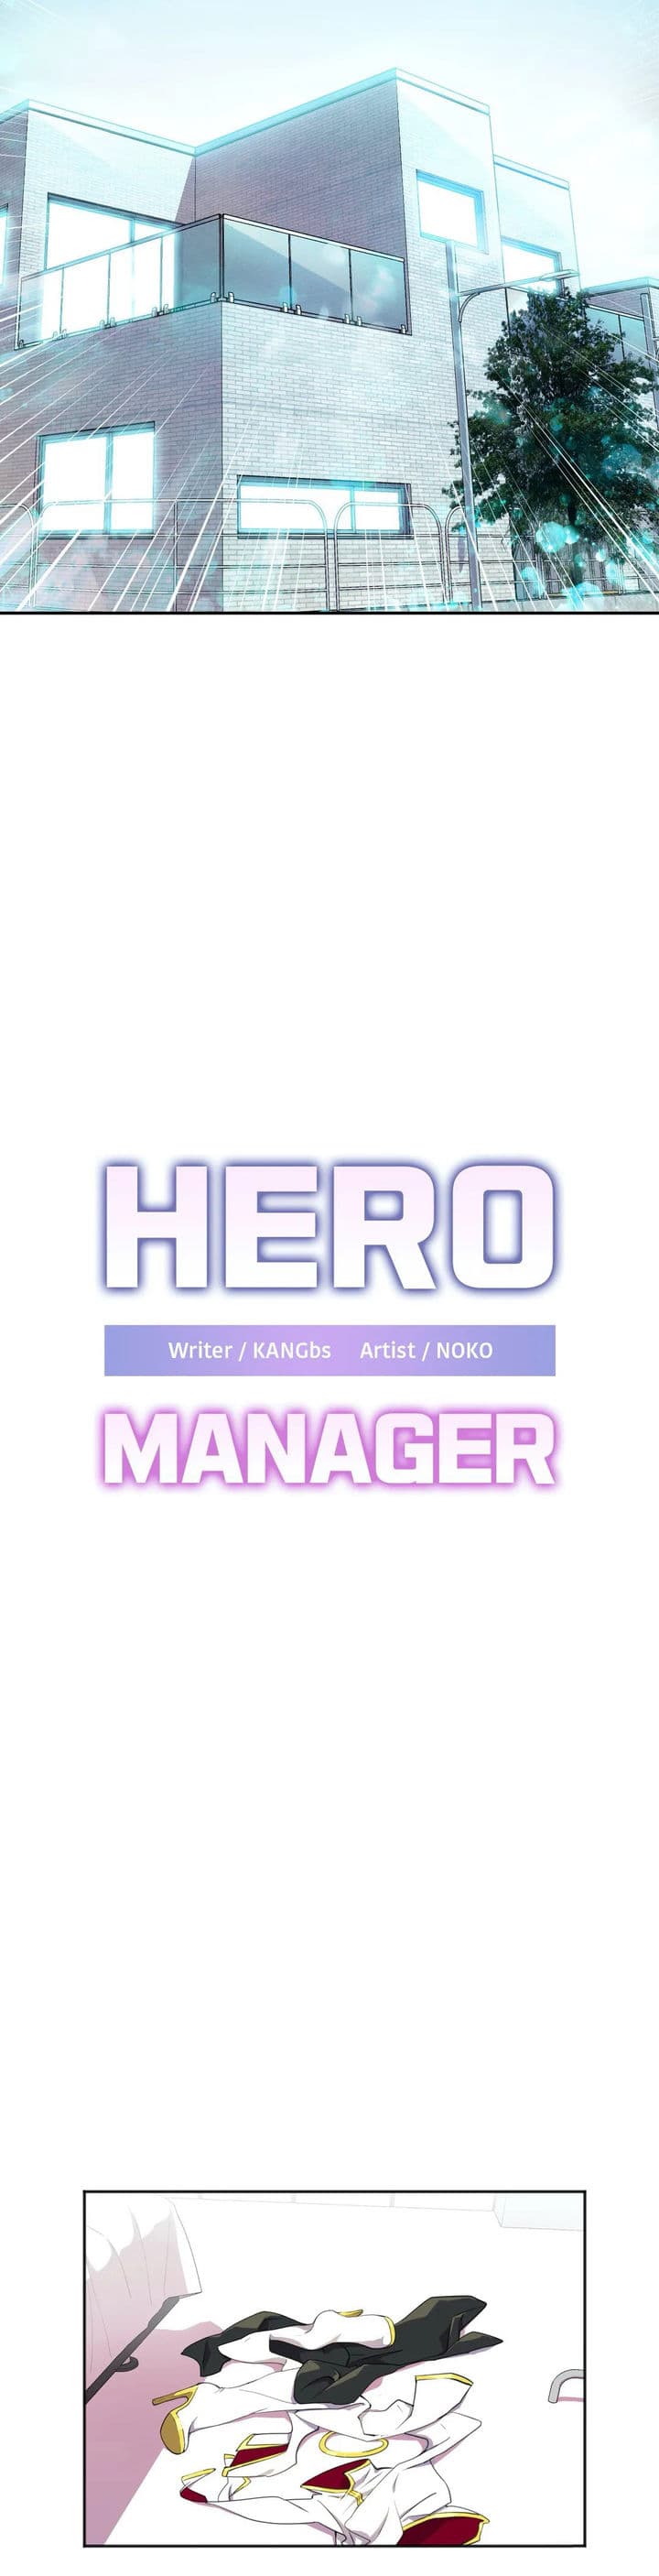 Hero Manager9 (5)